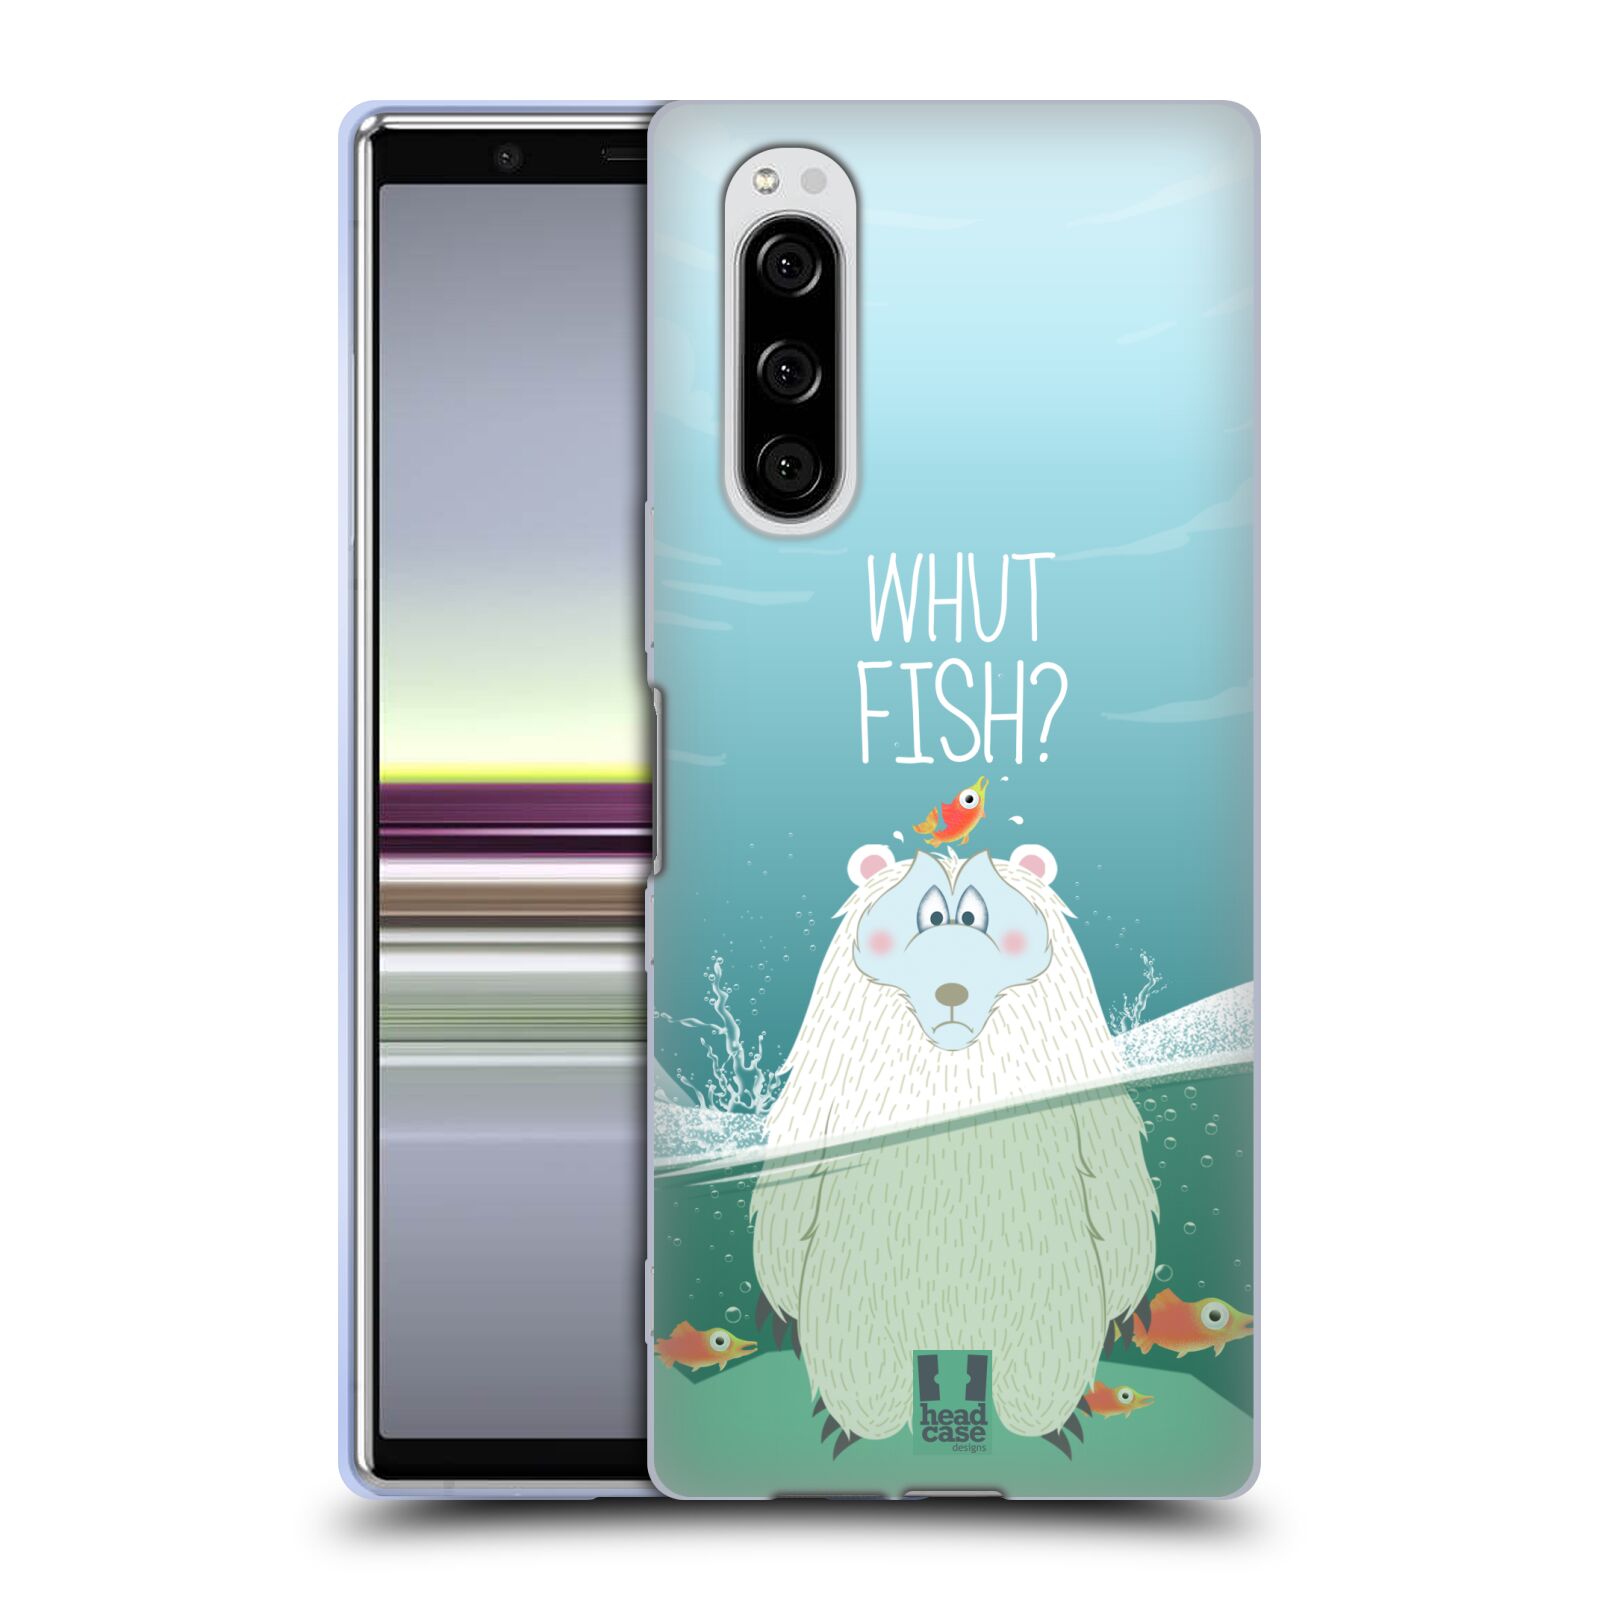 Silikonové pouzdro na mobil Sony Xperia 5 - Head Case - Medvěd Whut Fish?